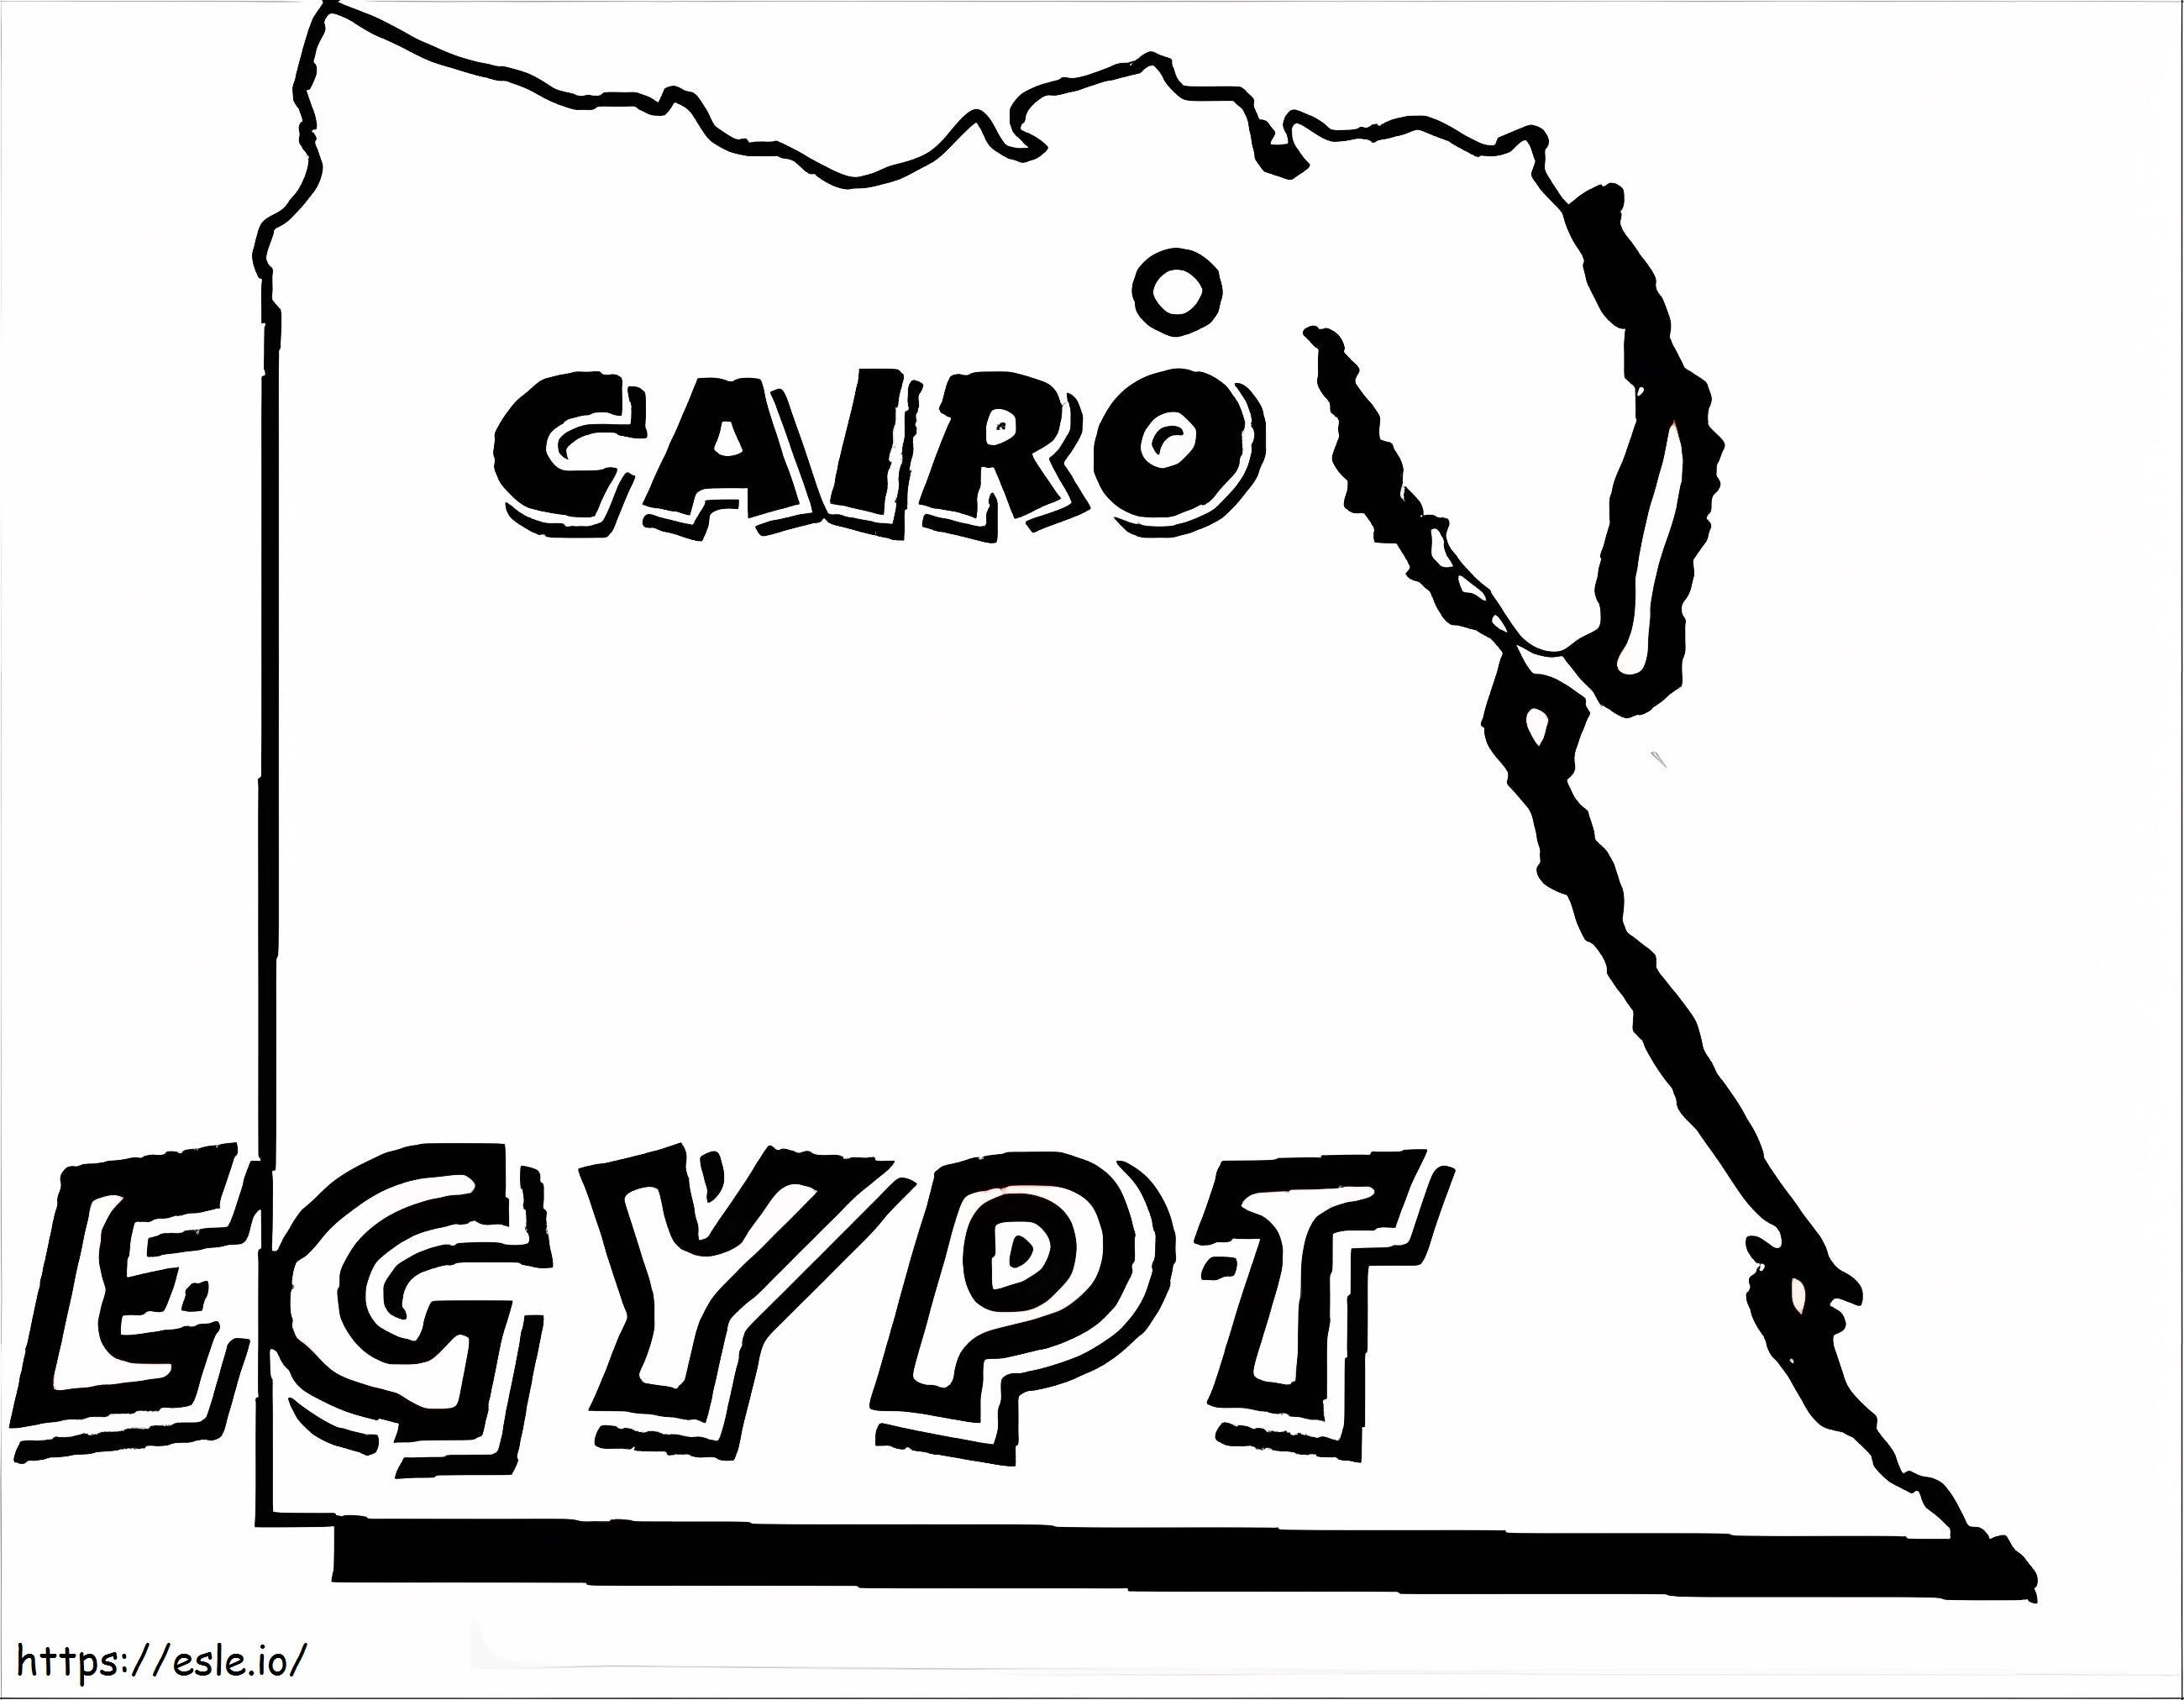 Peta Mesir Gambar Mewarnai